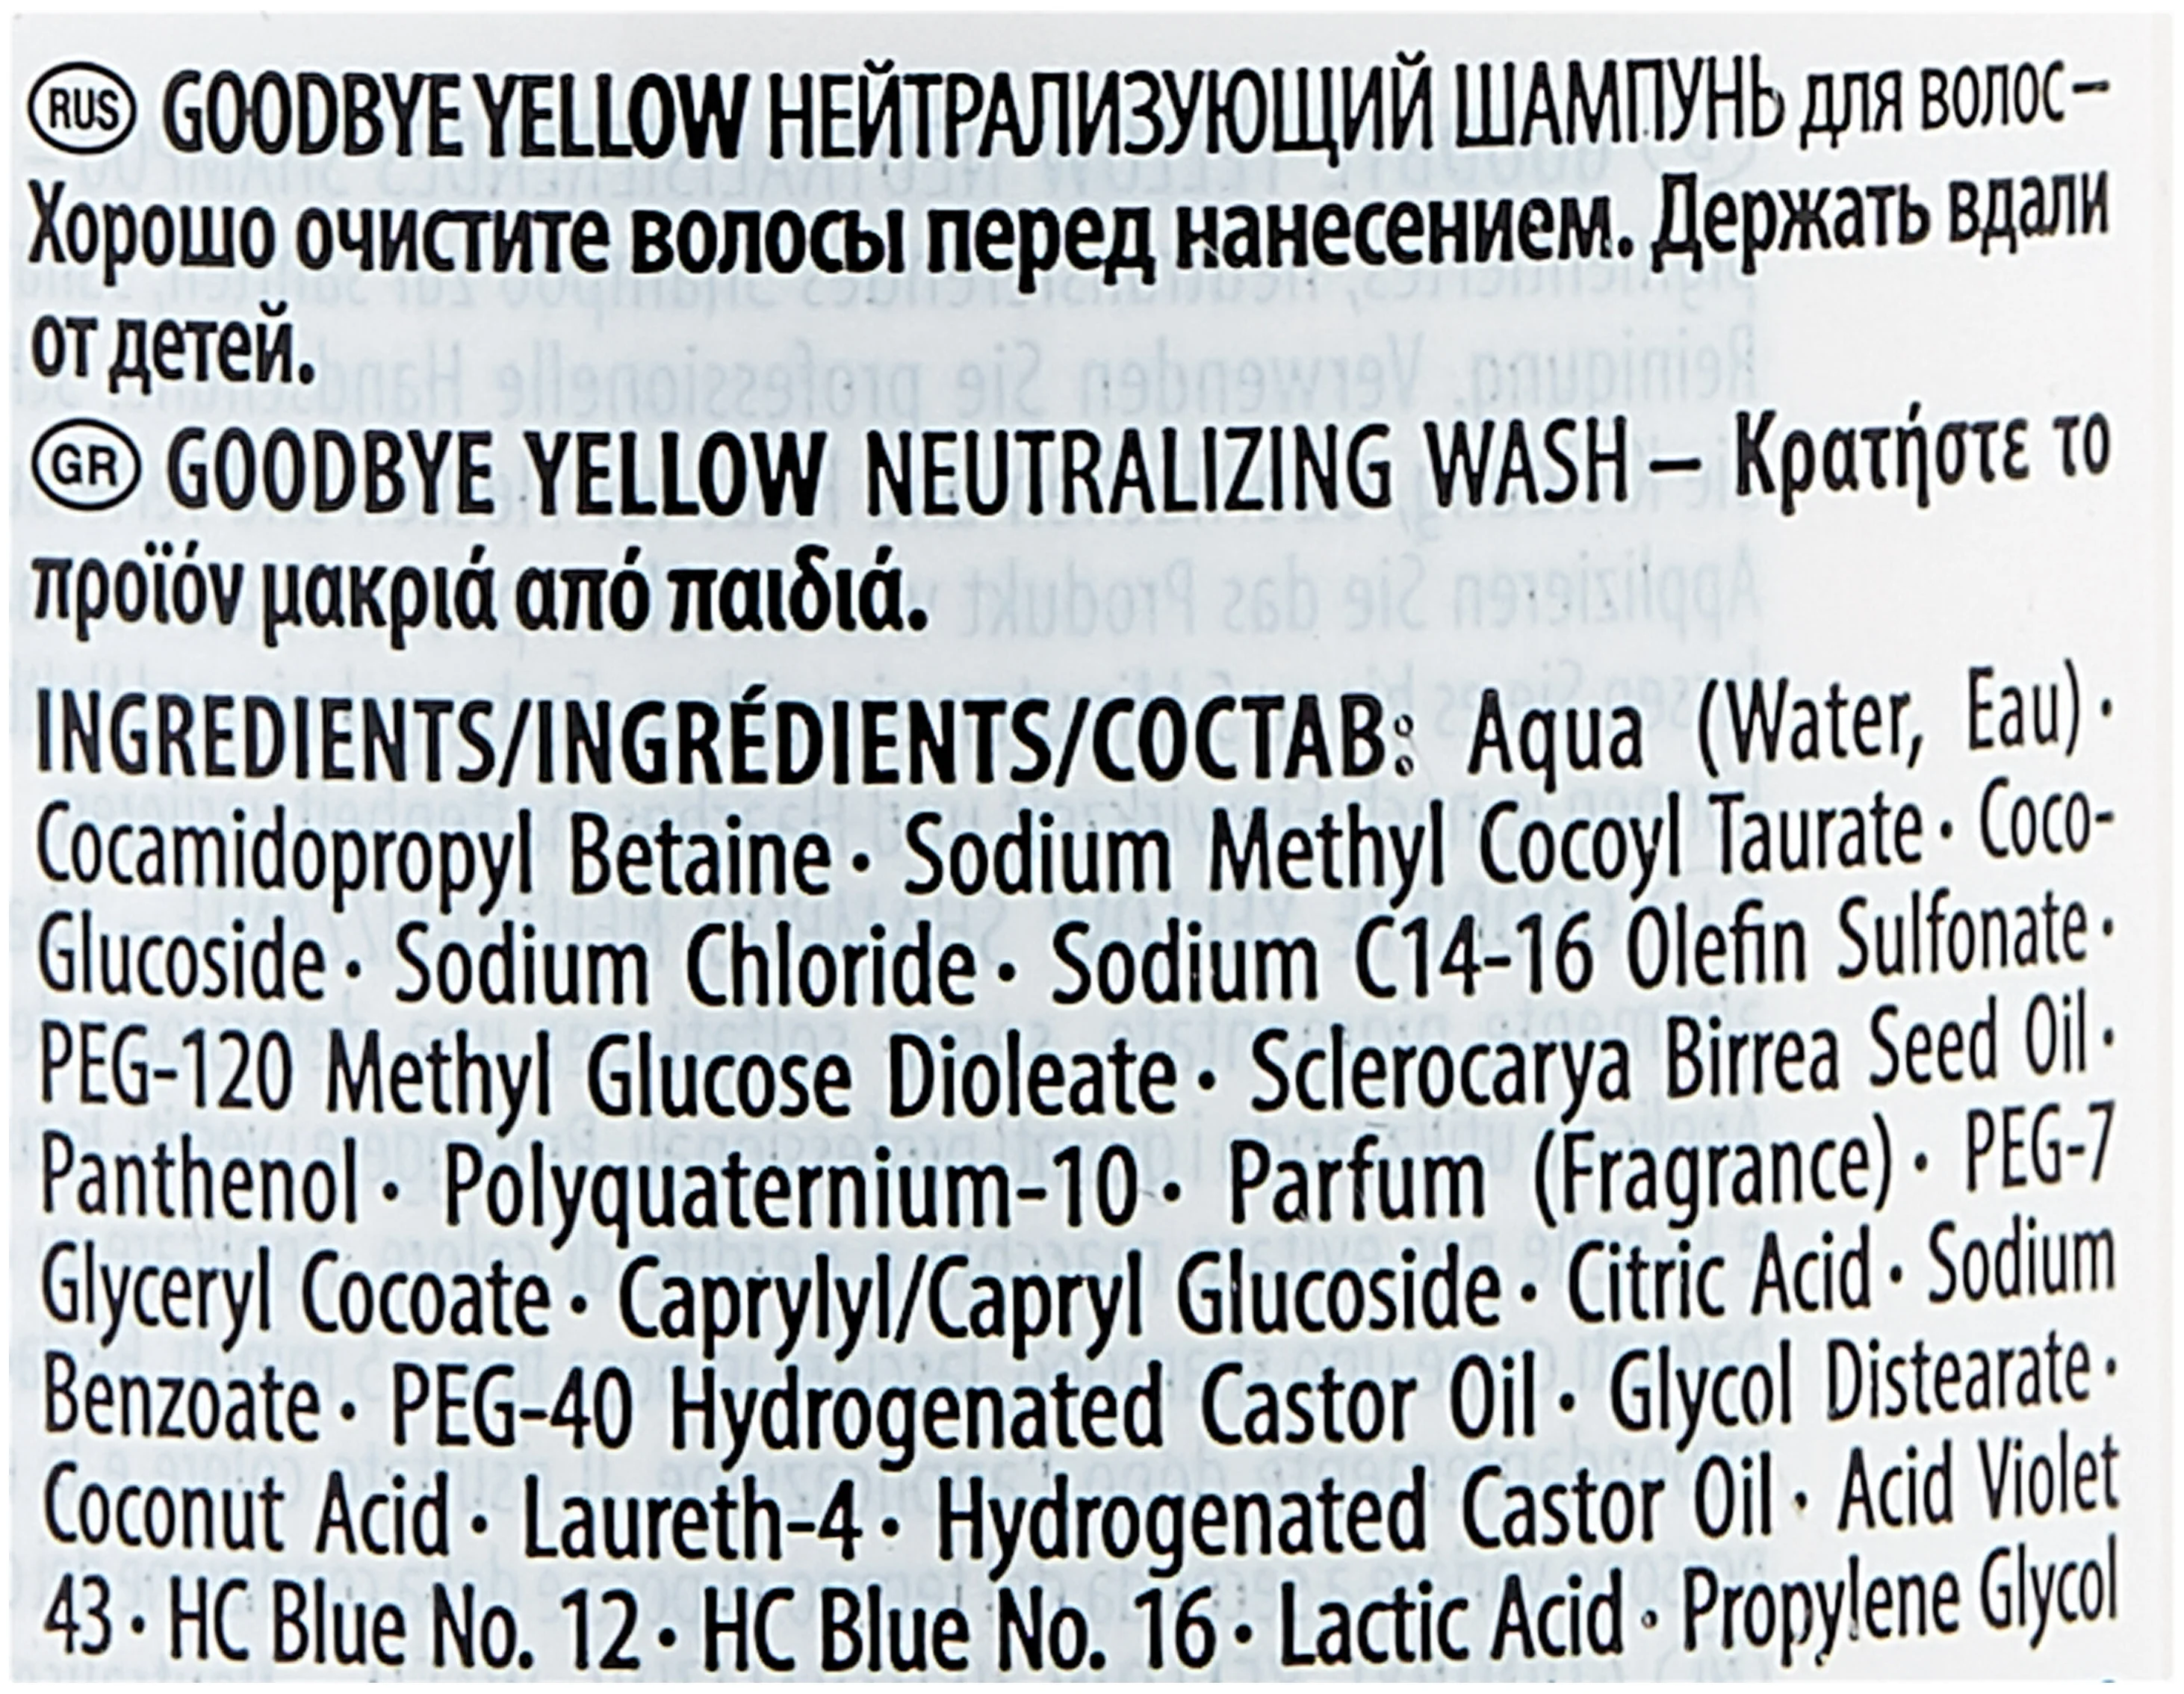 Schwarzkopf Professional Goodbye Yellow Neutralizing Wash - не содержит парабенов, сульфатов